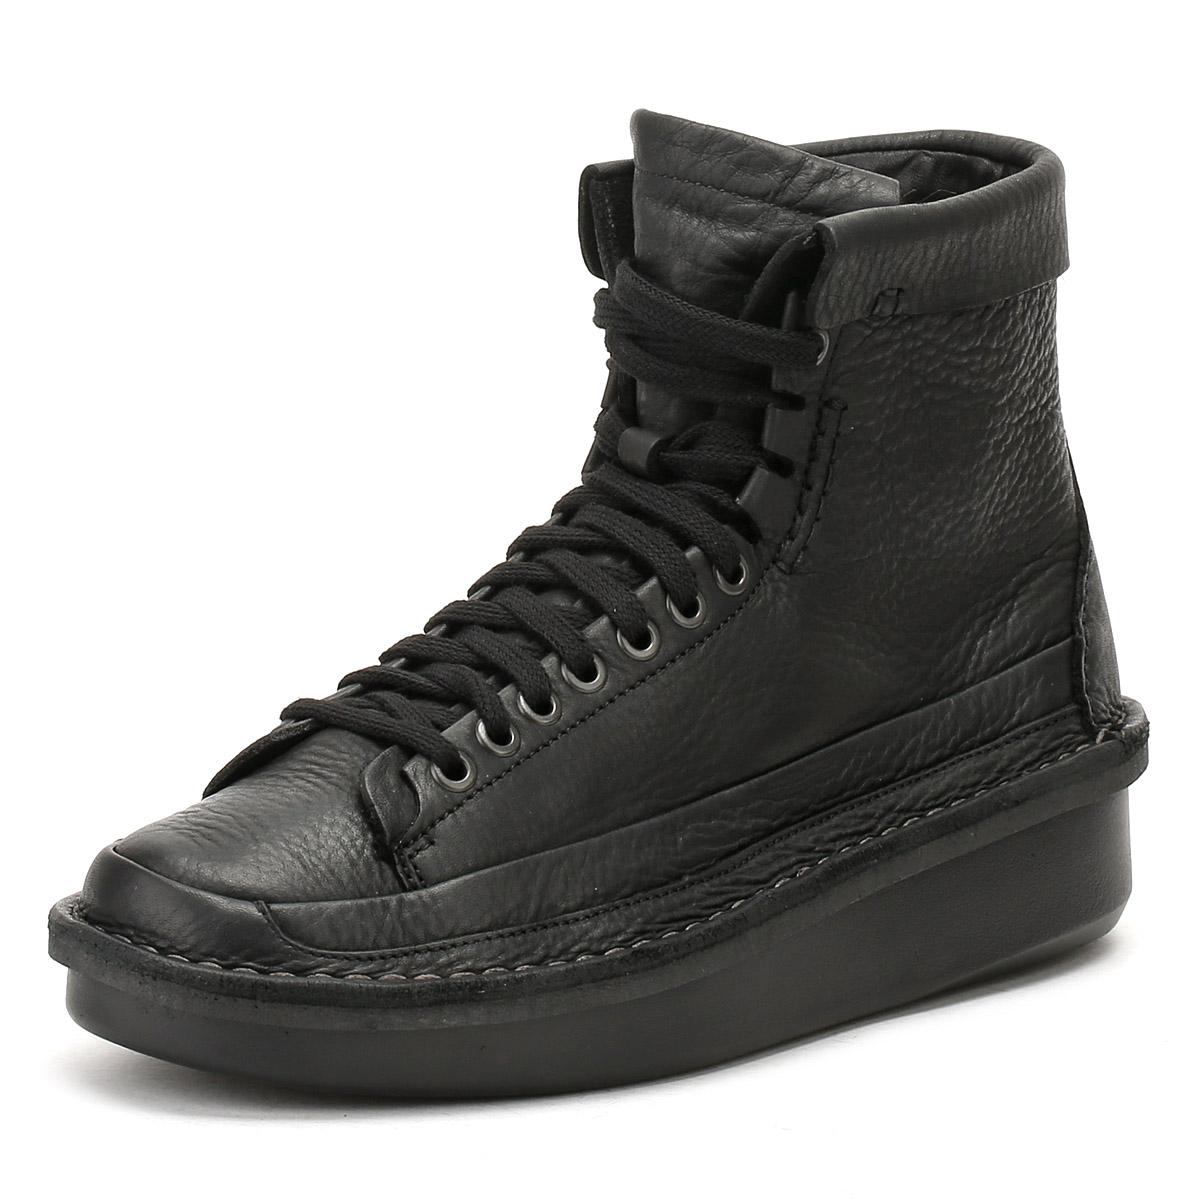 Lyst - Clarks Mens Black Leather Oswyn Hi Shoes in Black for Men